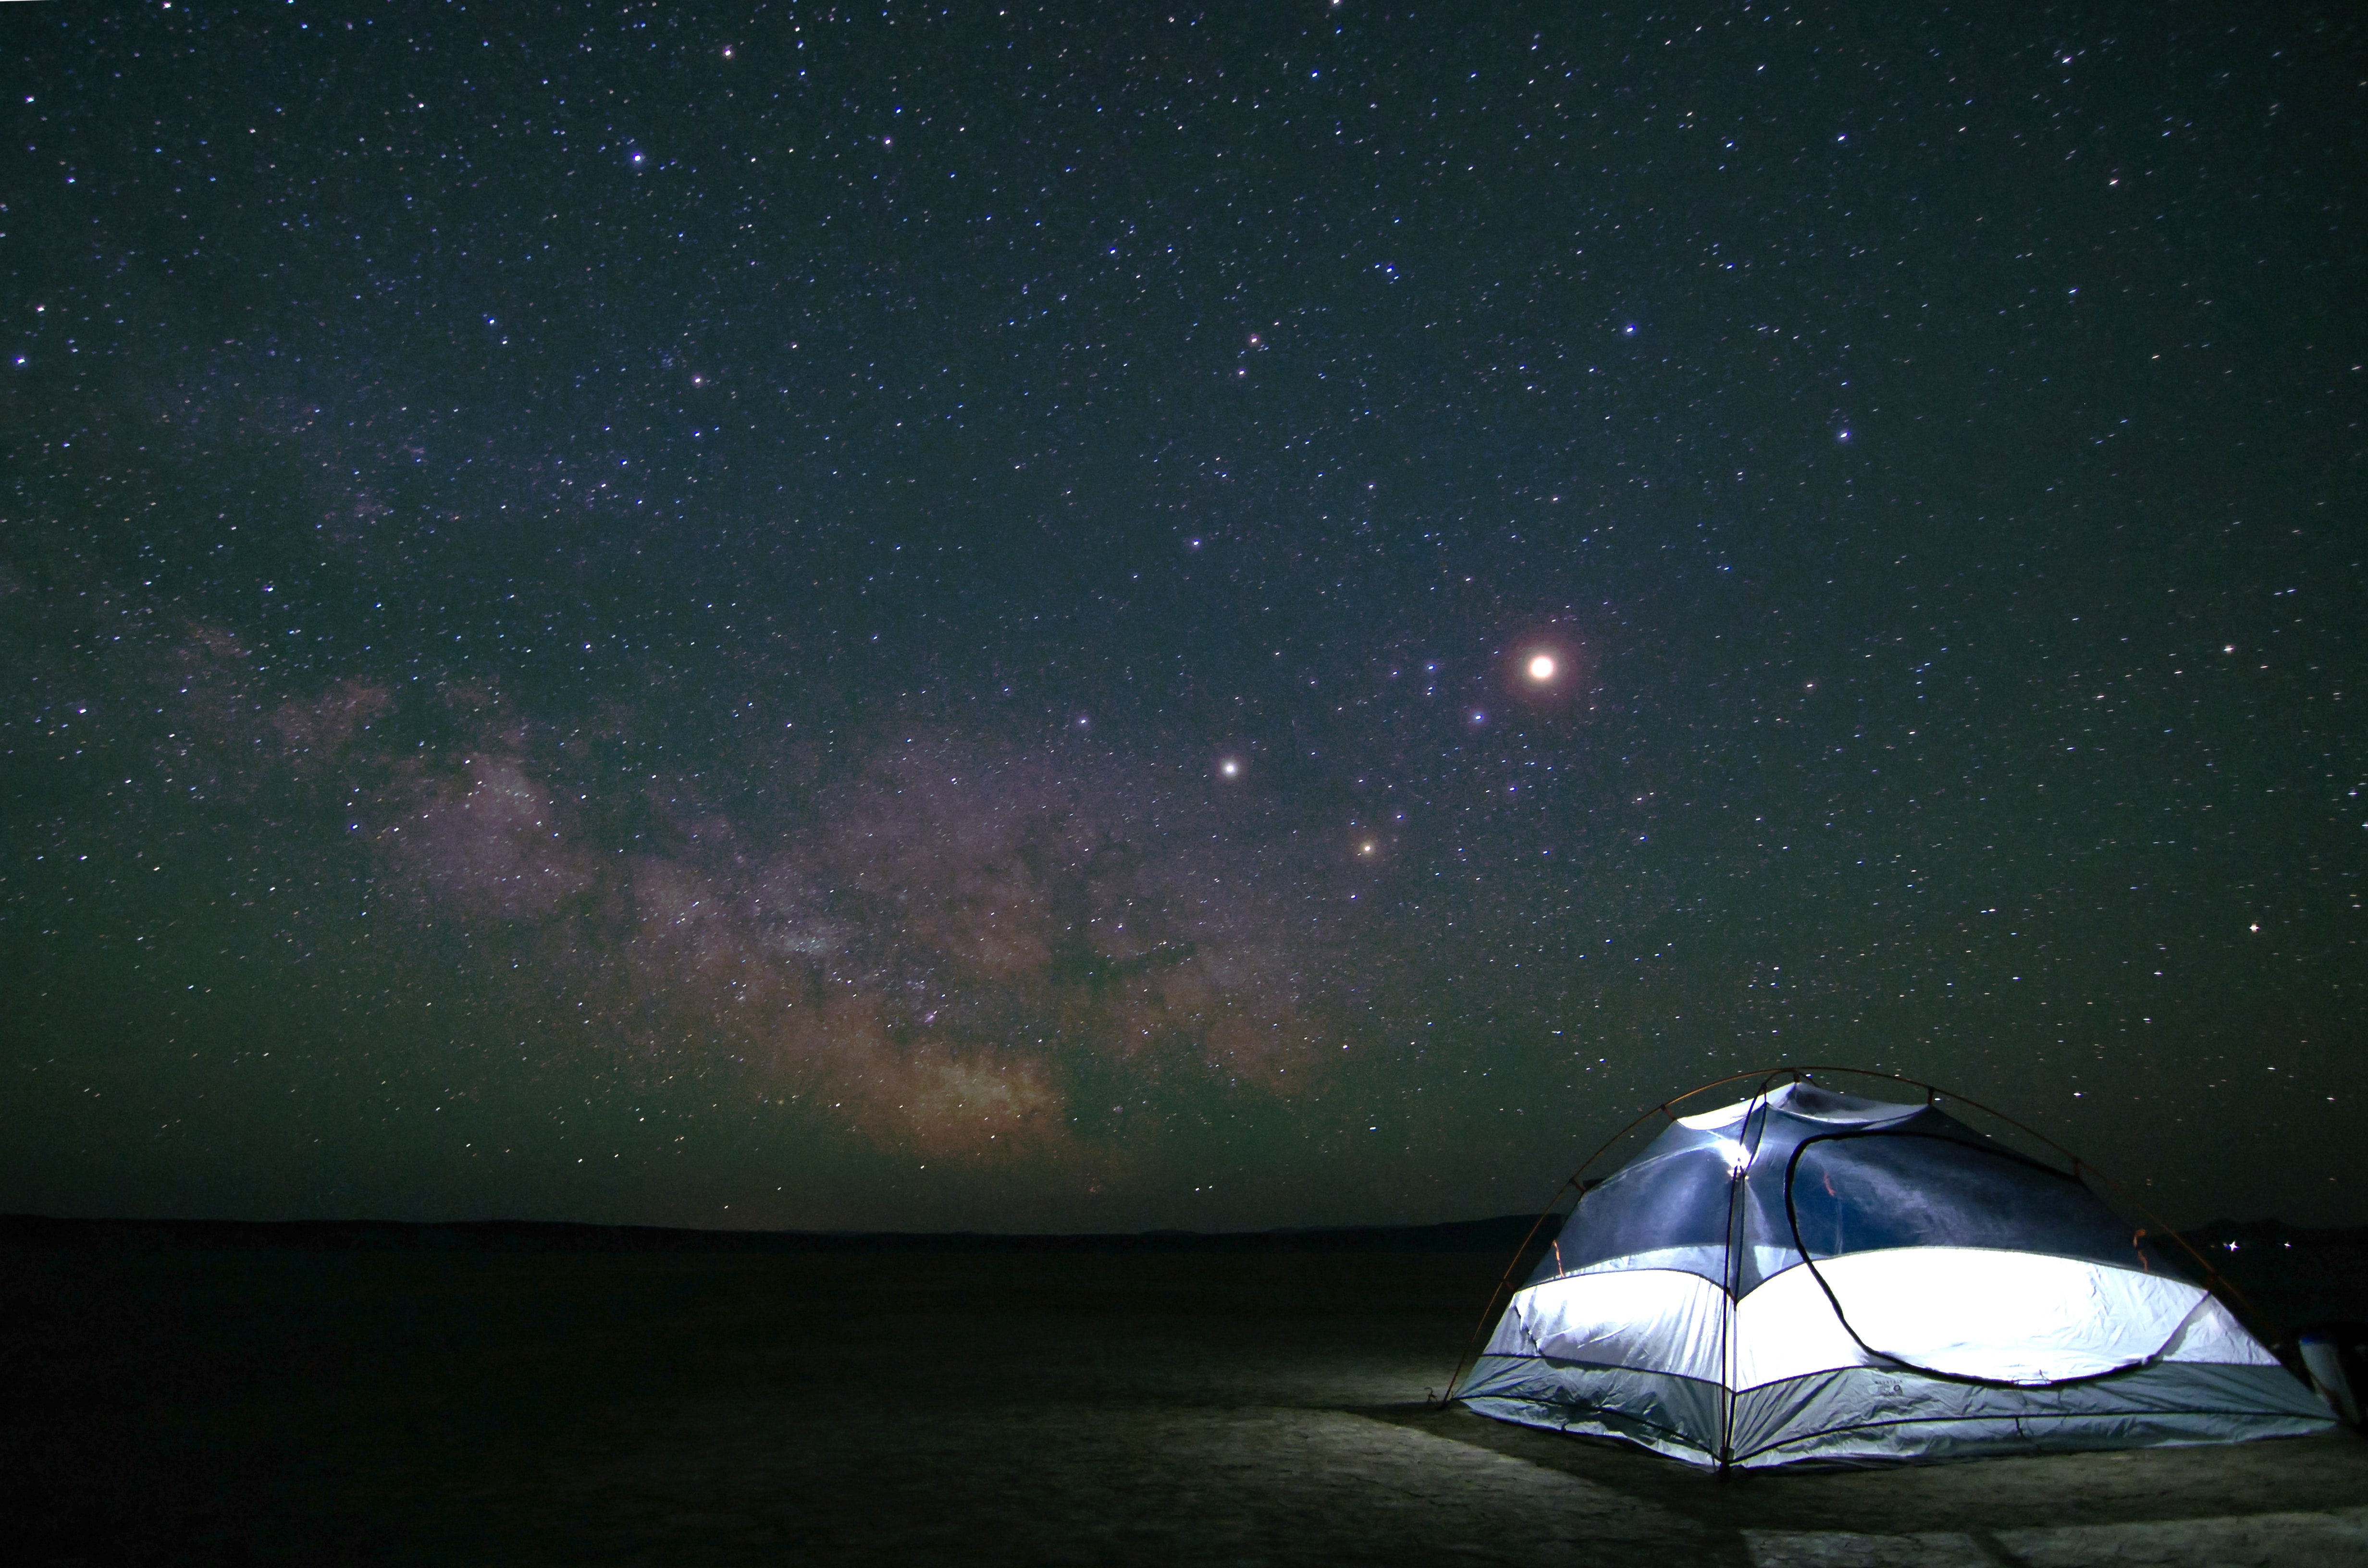 Blue tent under starry sky